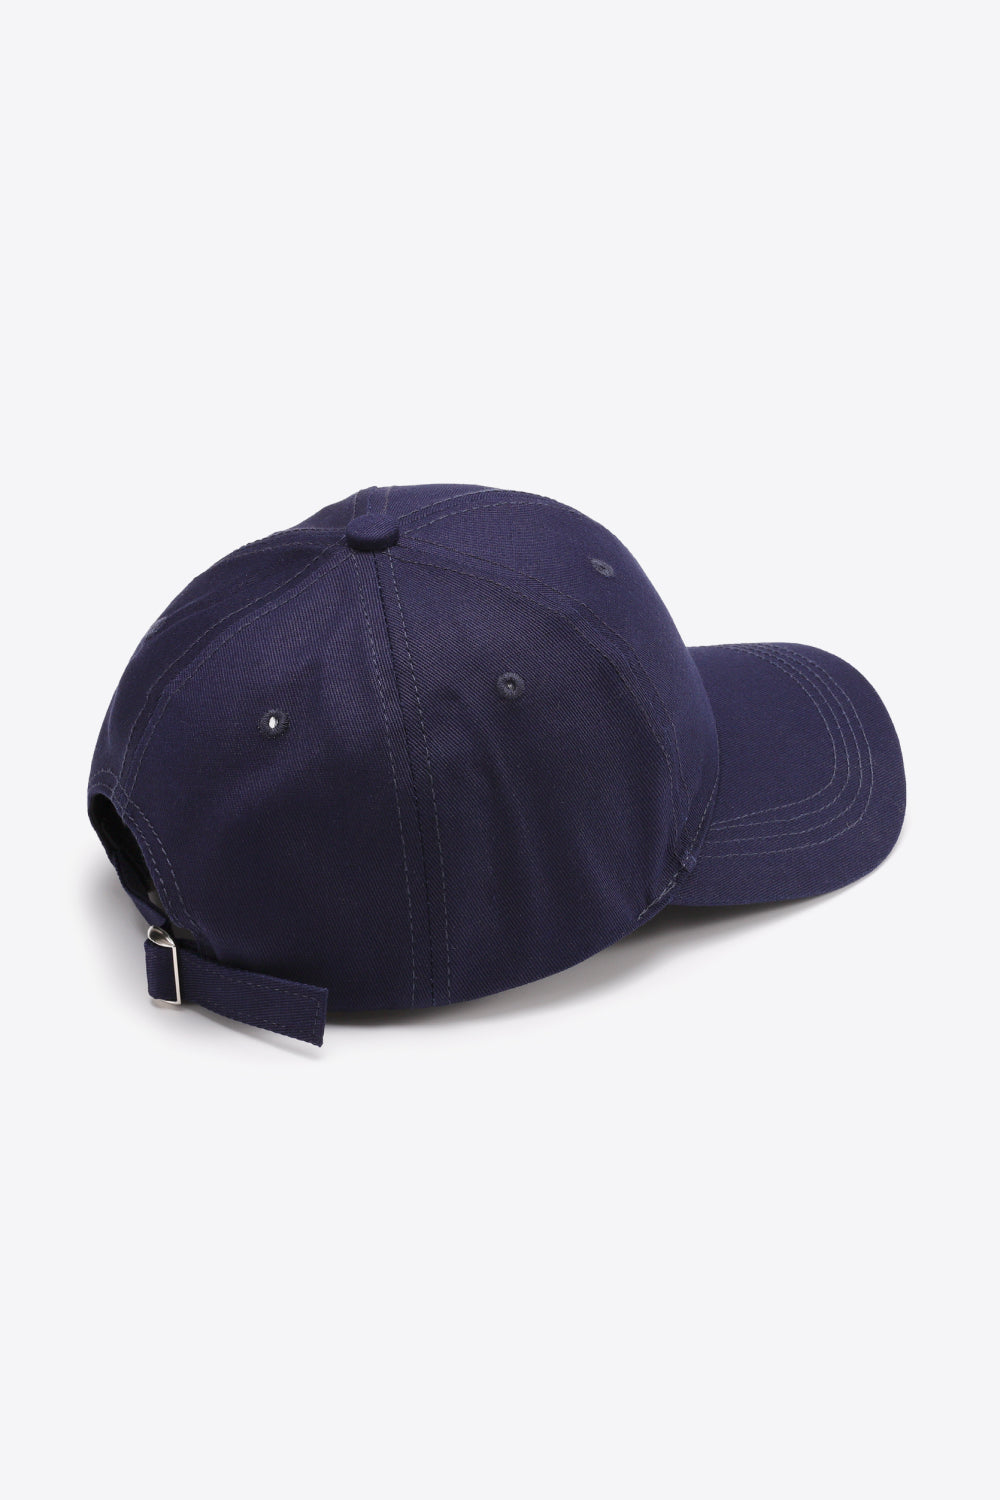 Plain Adjustable Cotton Baseball Cap